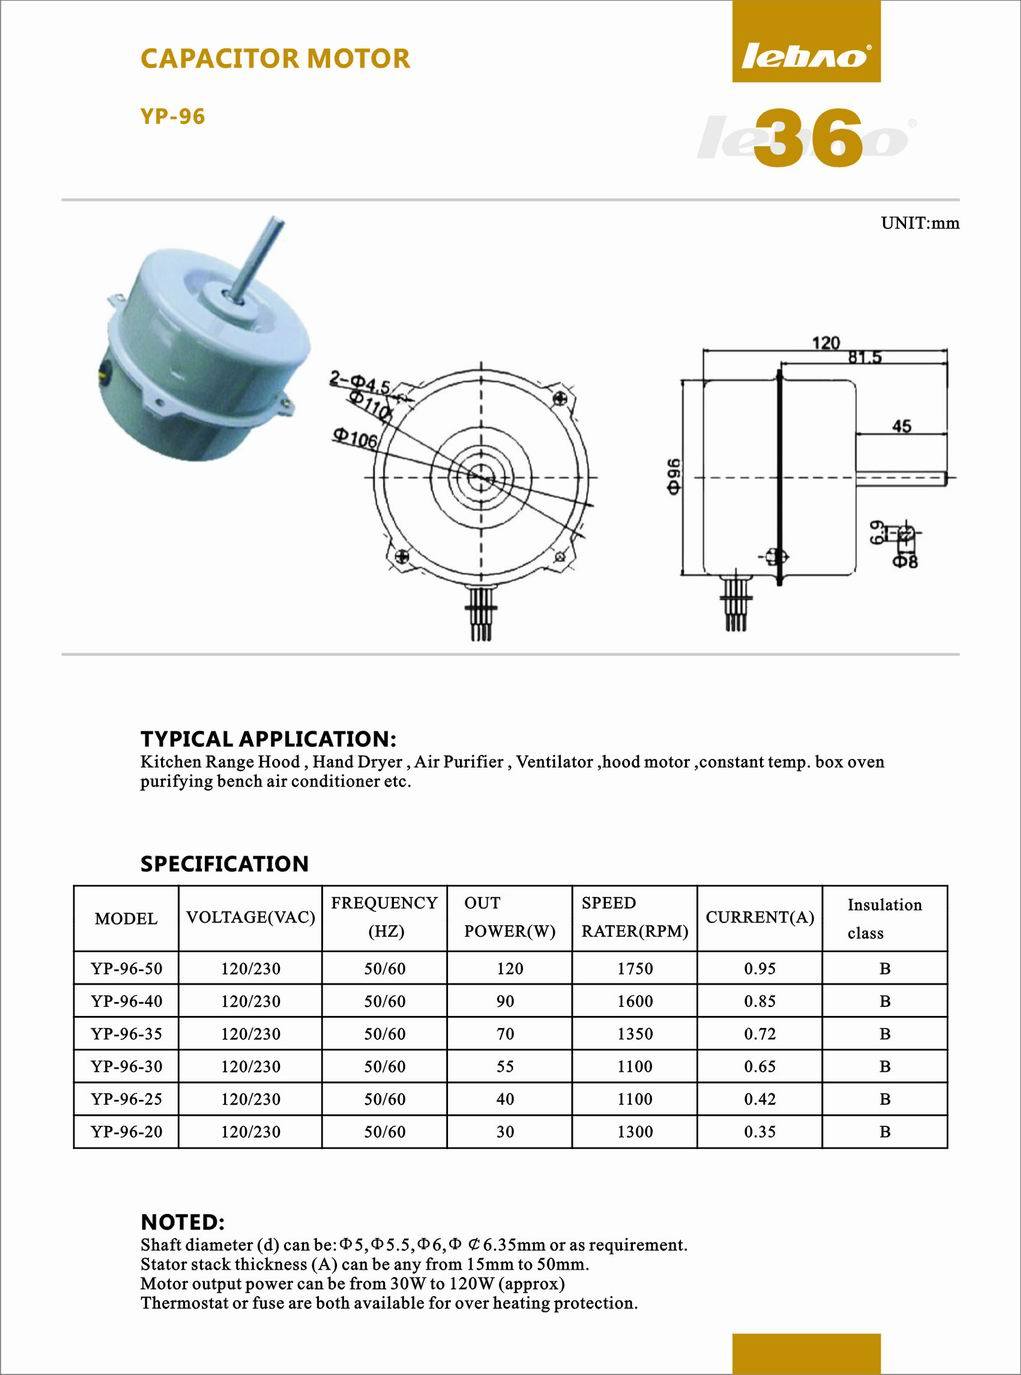 1250rpm 0.65A Power-Saving High Efficency Capacitor Motor for Water Pump/Bathroom Fan/Air Purifier